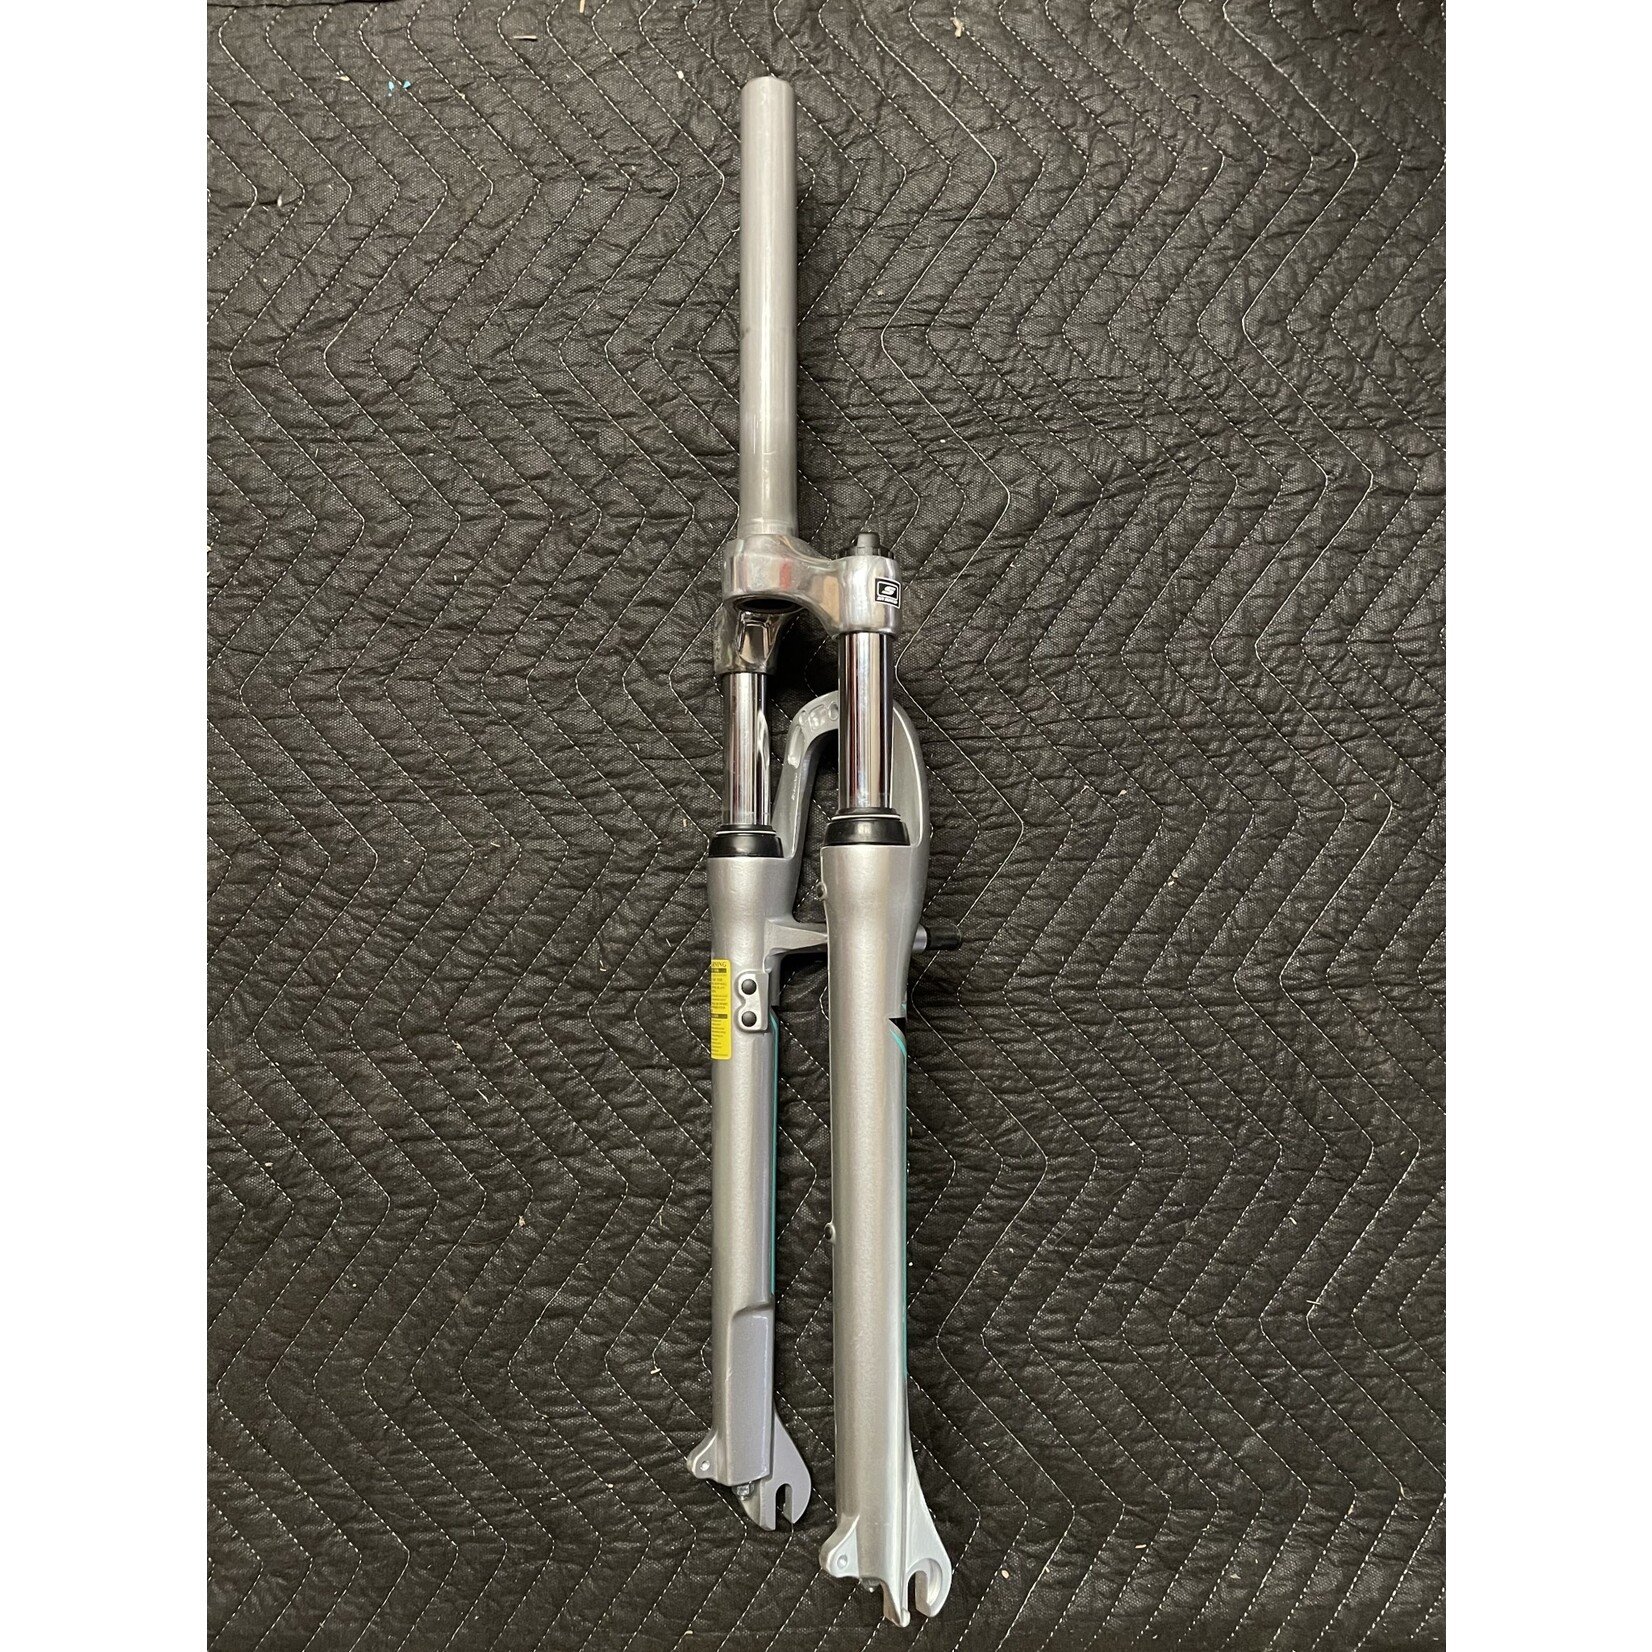 Vitesse 700C Threadless Suspension Fork 9” x 1 1/8"Steer Tube (Silver and Teal)